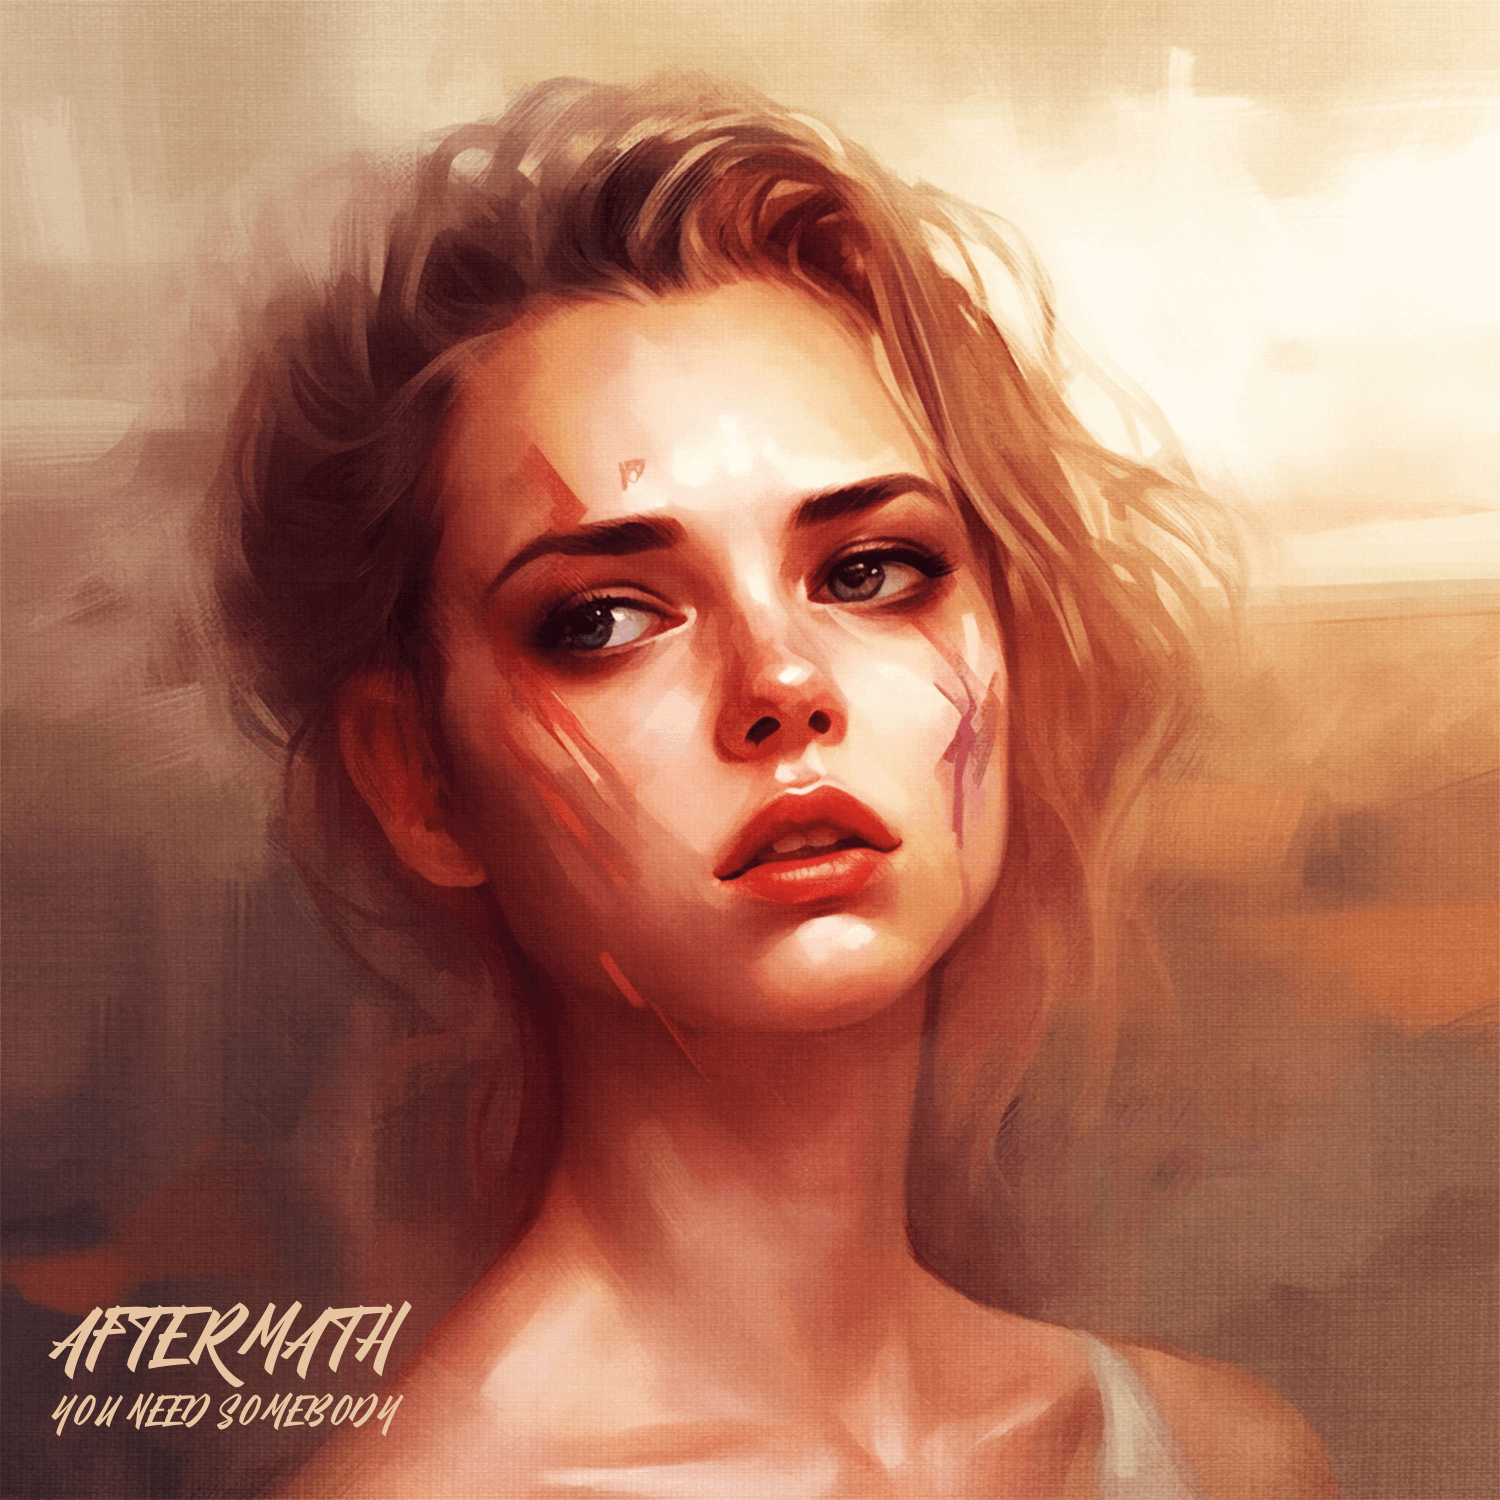 Aftermath by Jamie Holoran